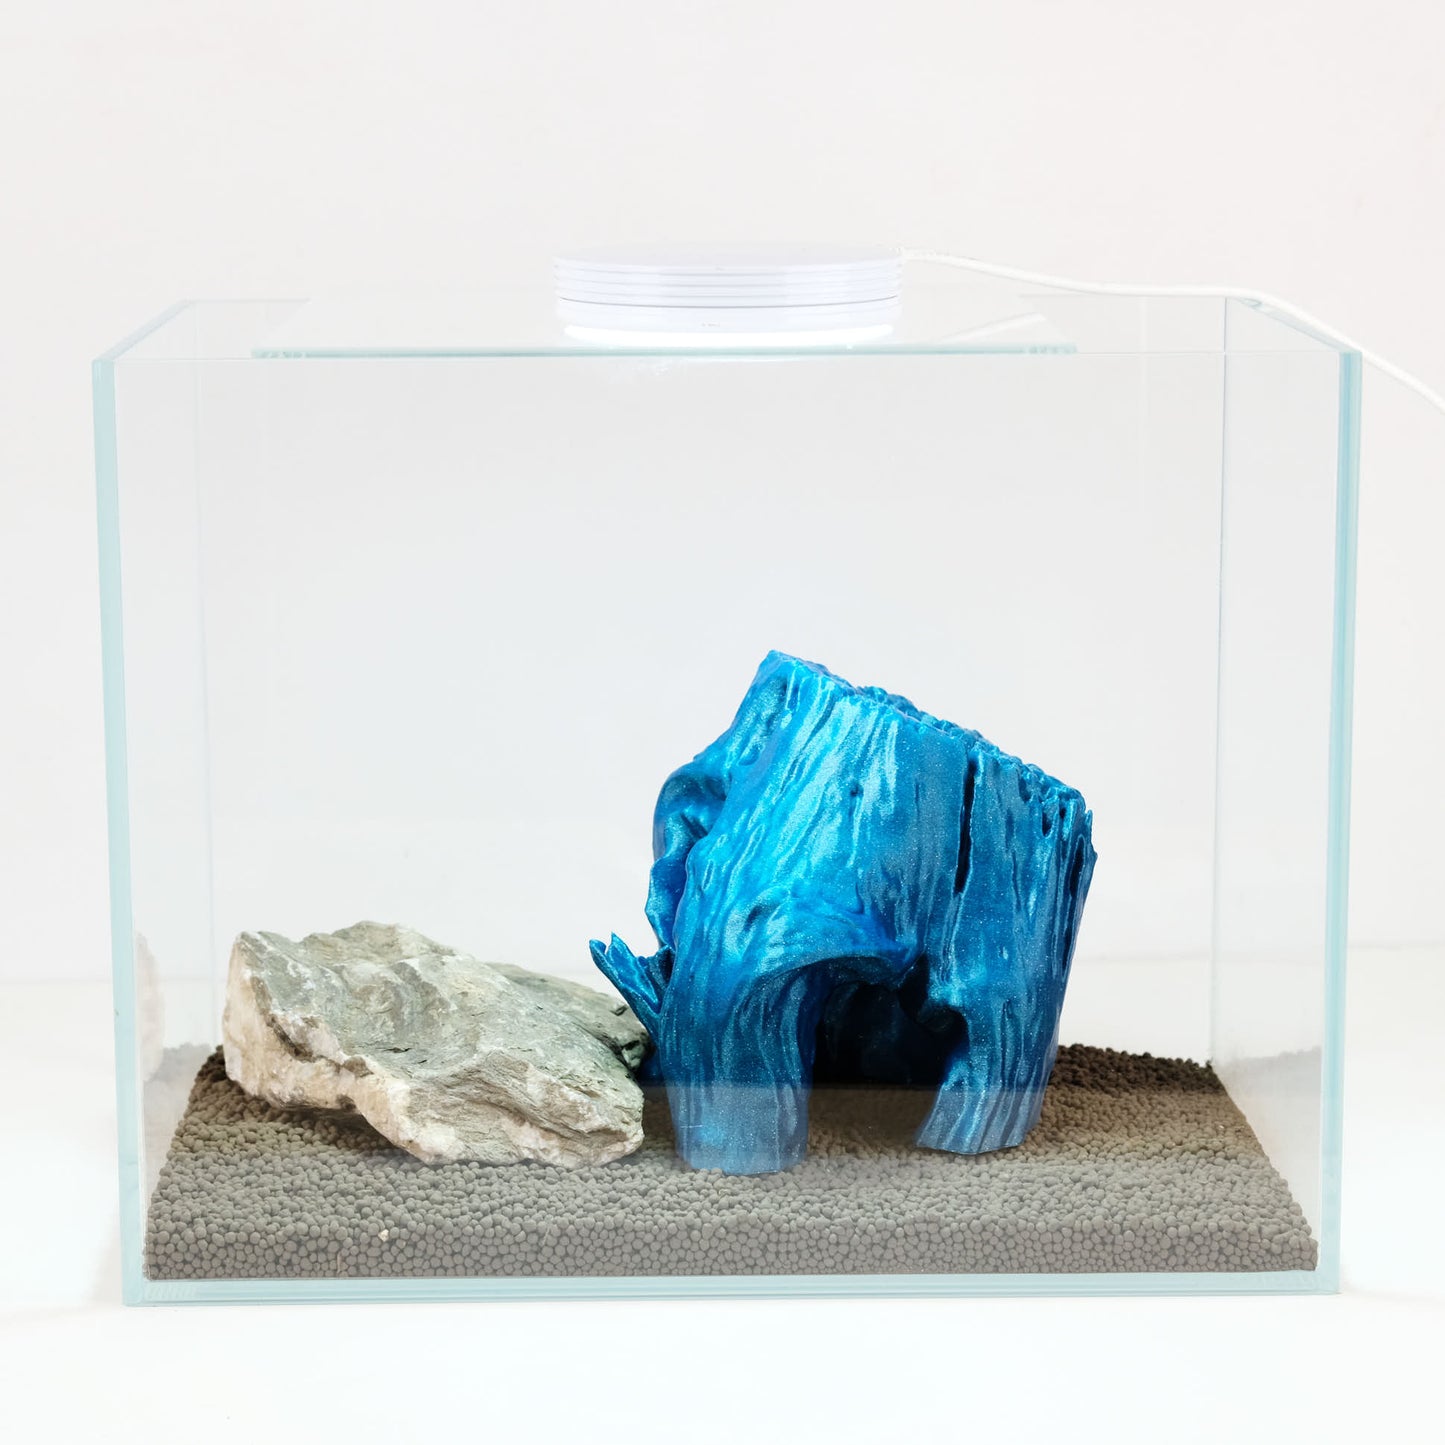 Aquarium Stump Hide / Teal Blue / 5" 3D Printed Nano Aquarium Decor